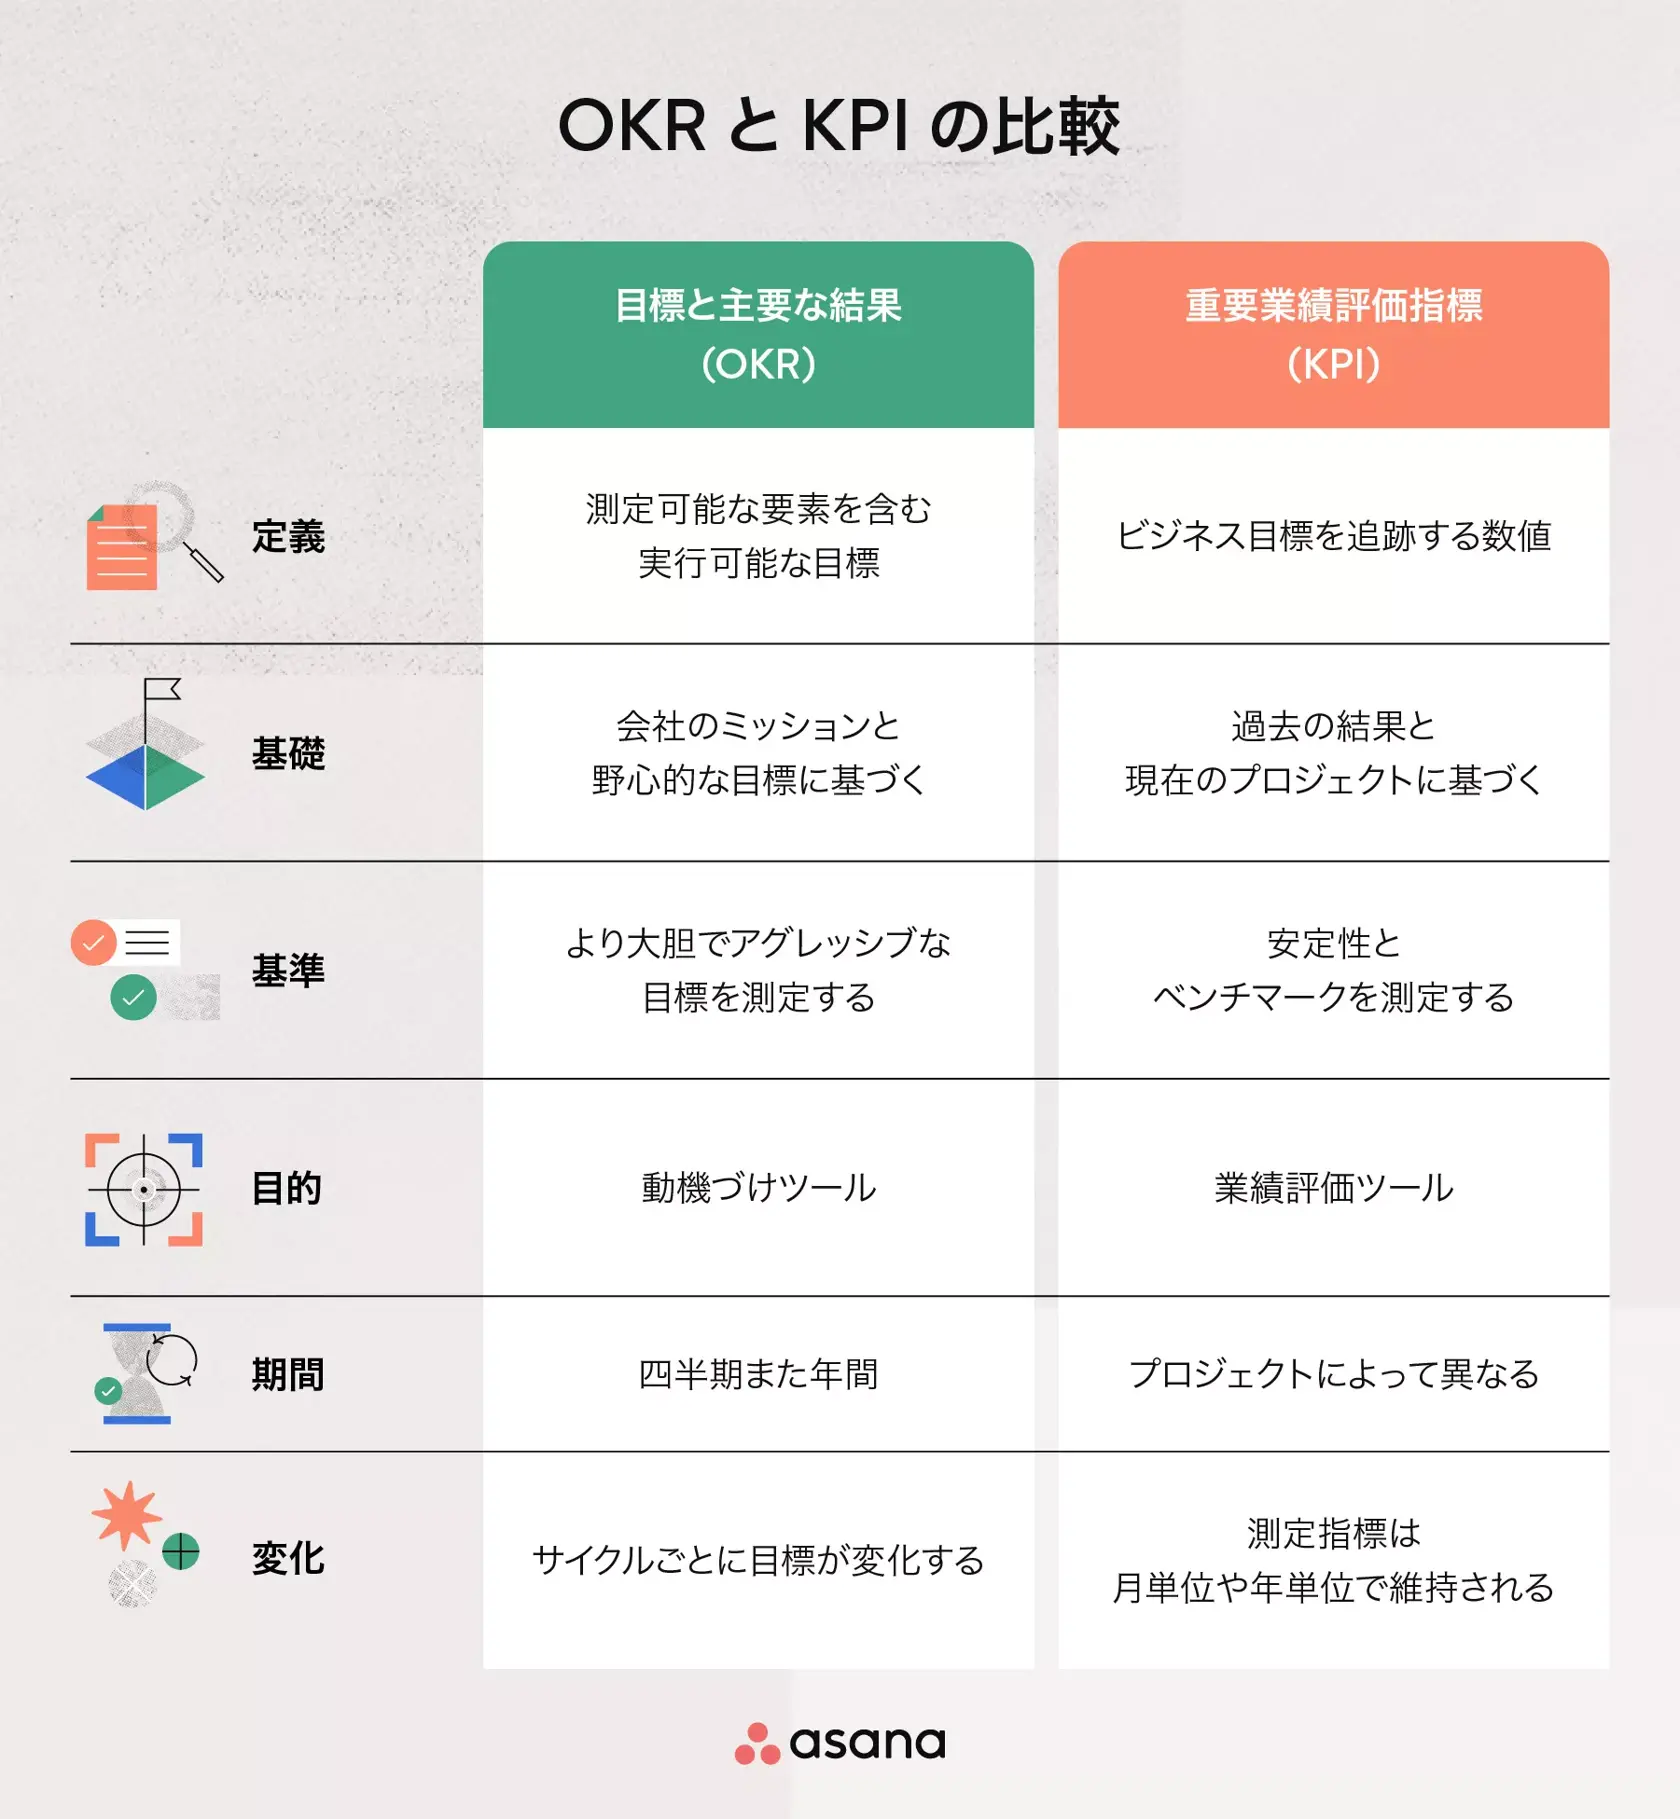 OKR と KPI の比較